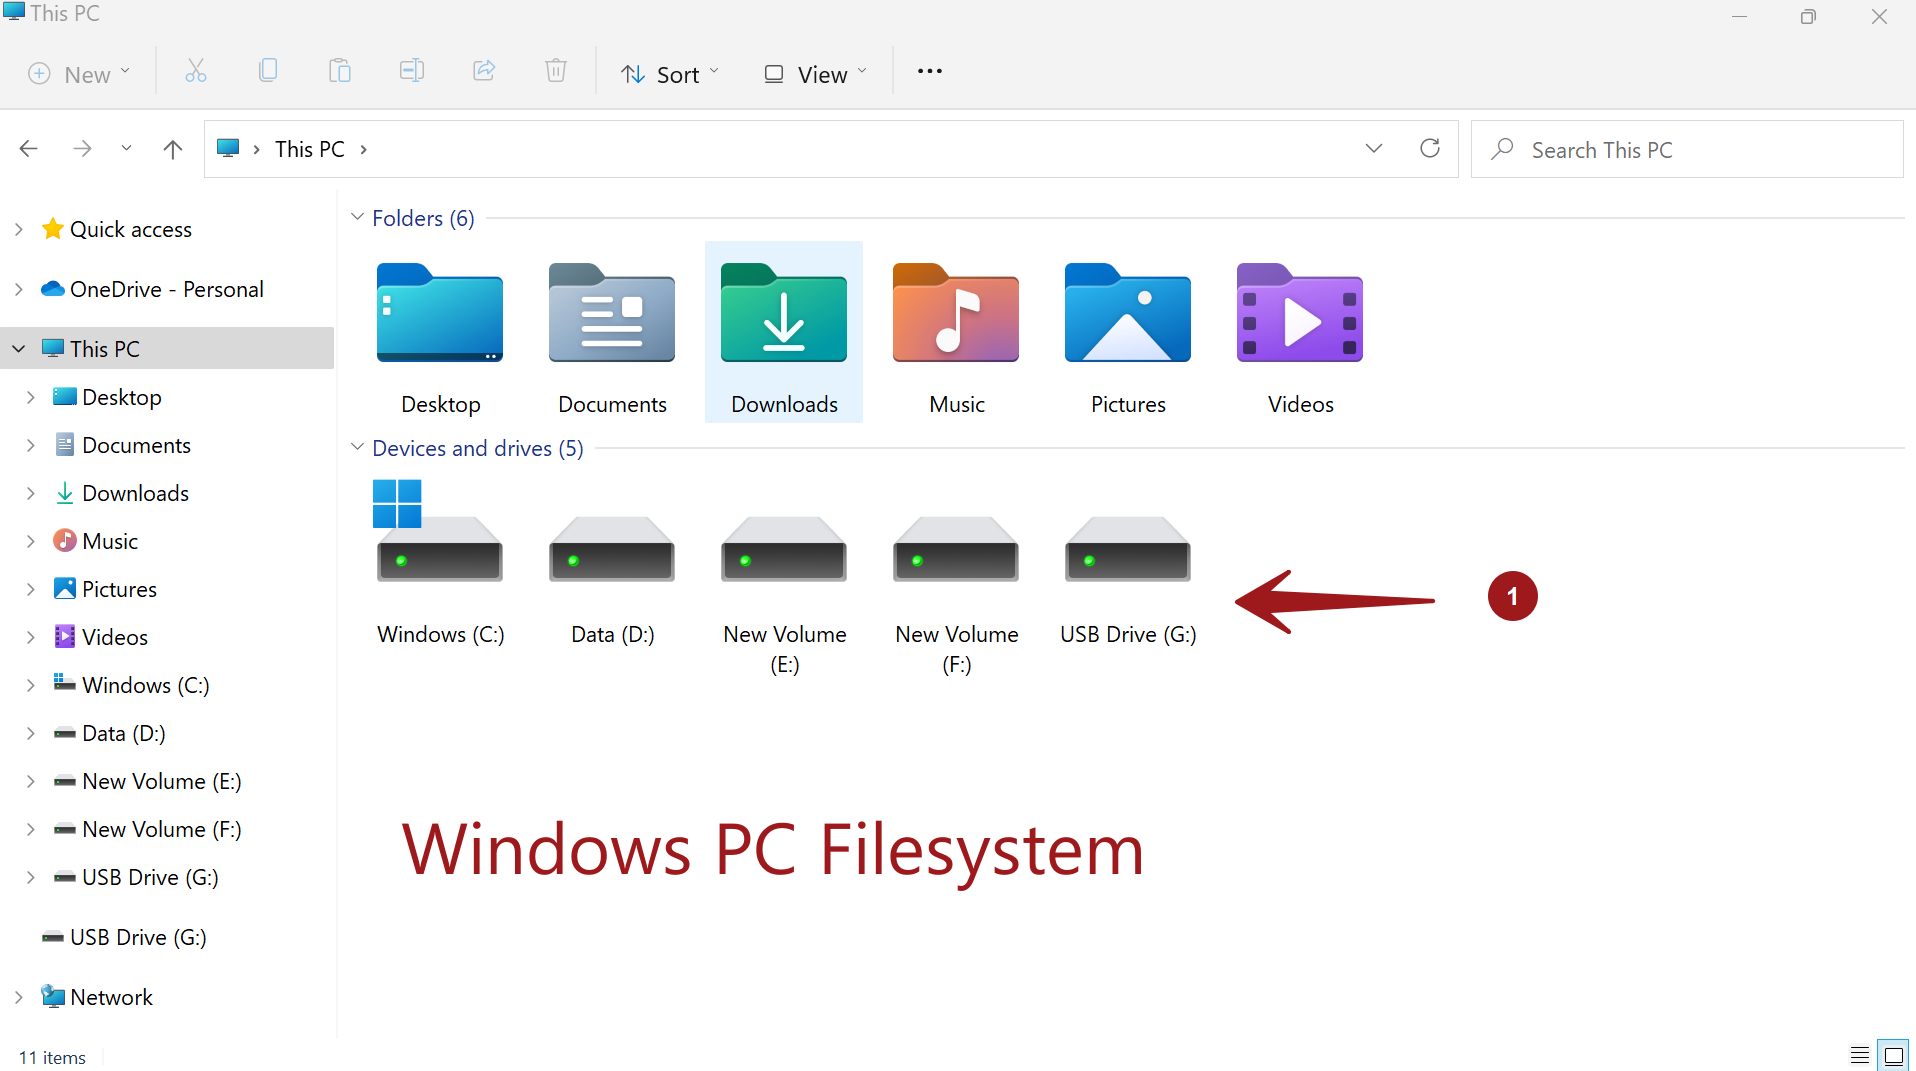 Windows PC Filesystem